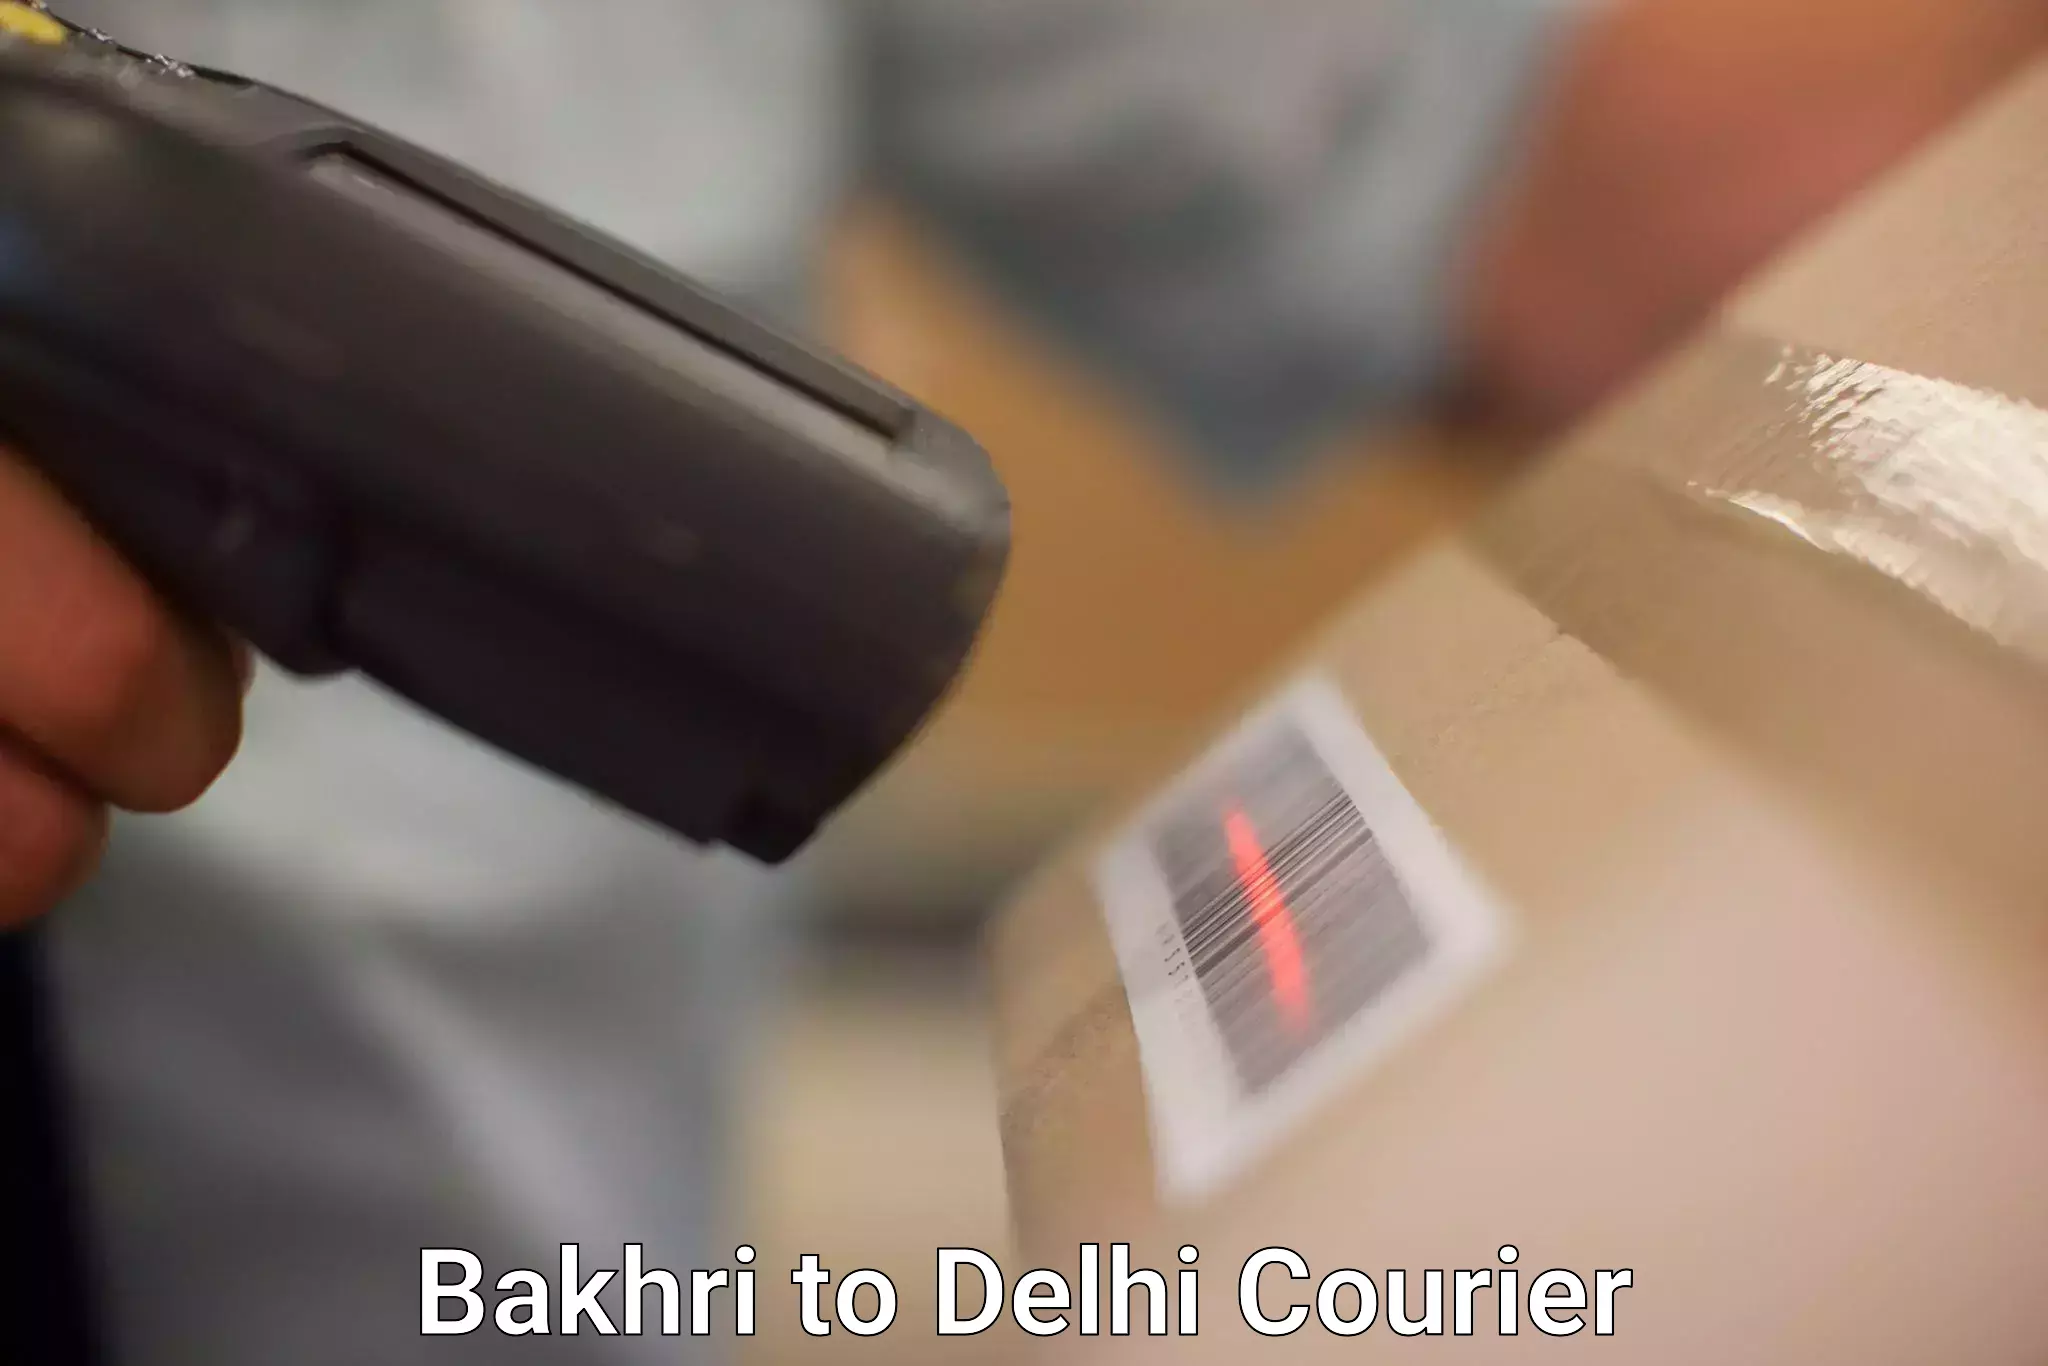 Global logistics network Bakhri to University of Delhi